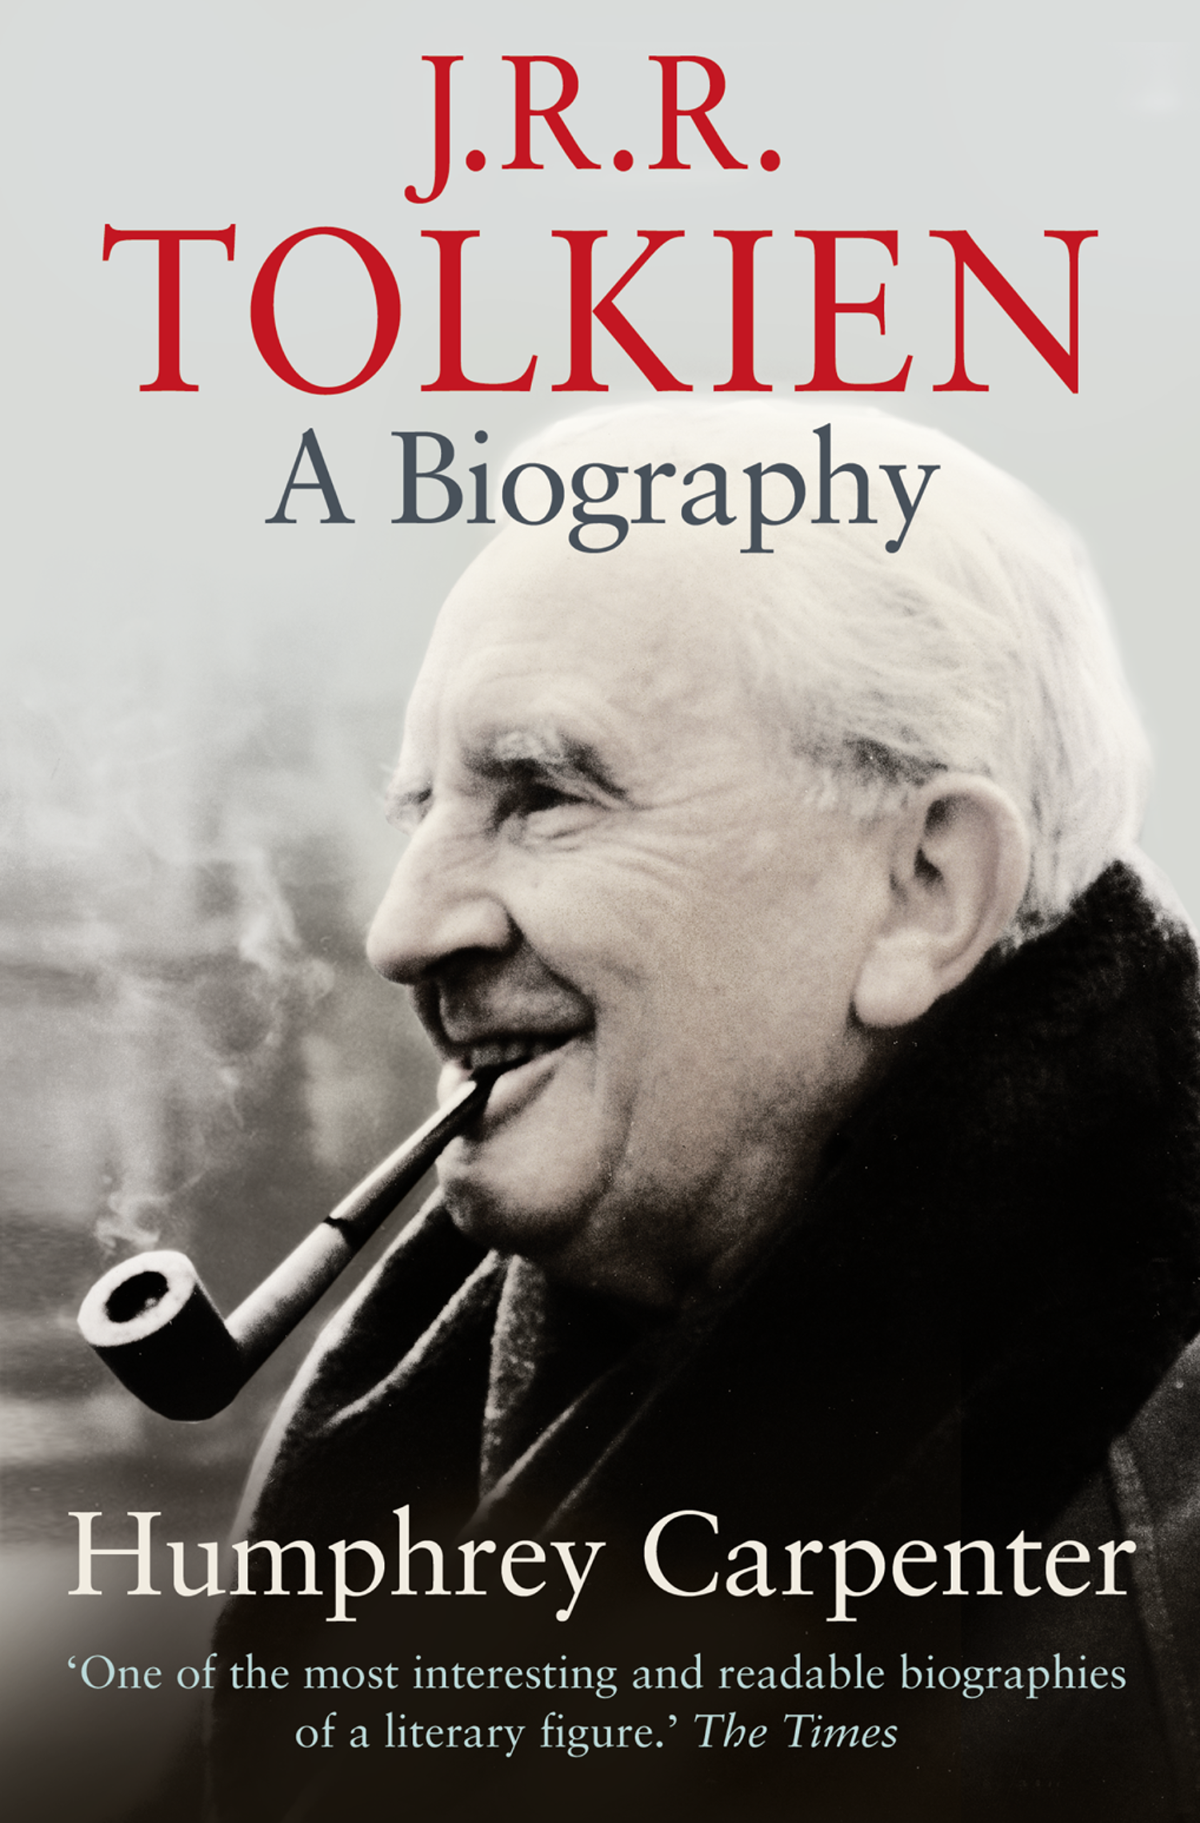 JRR Tolkien a biography - image 1